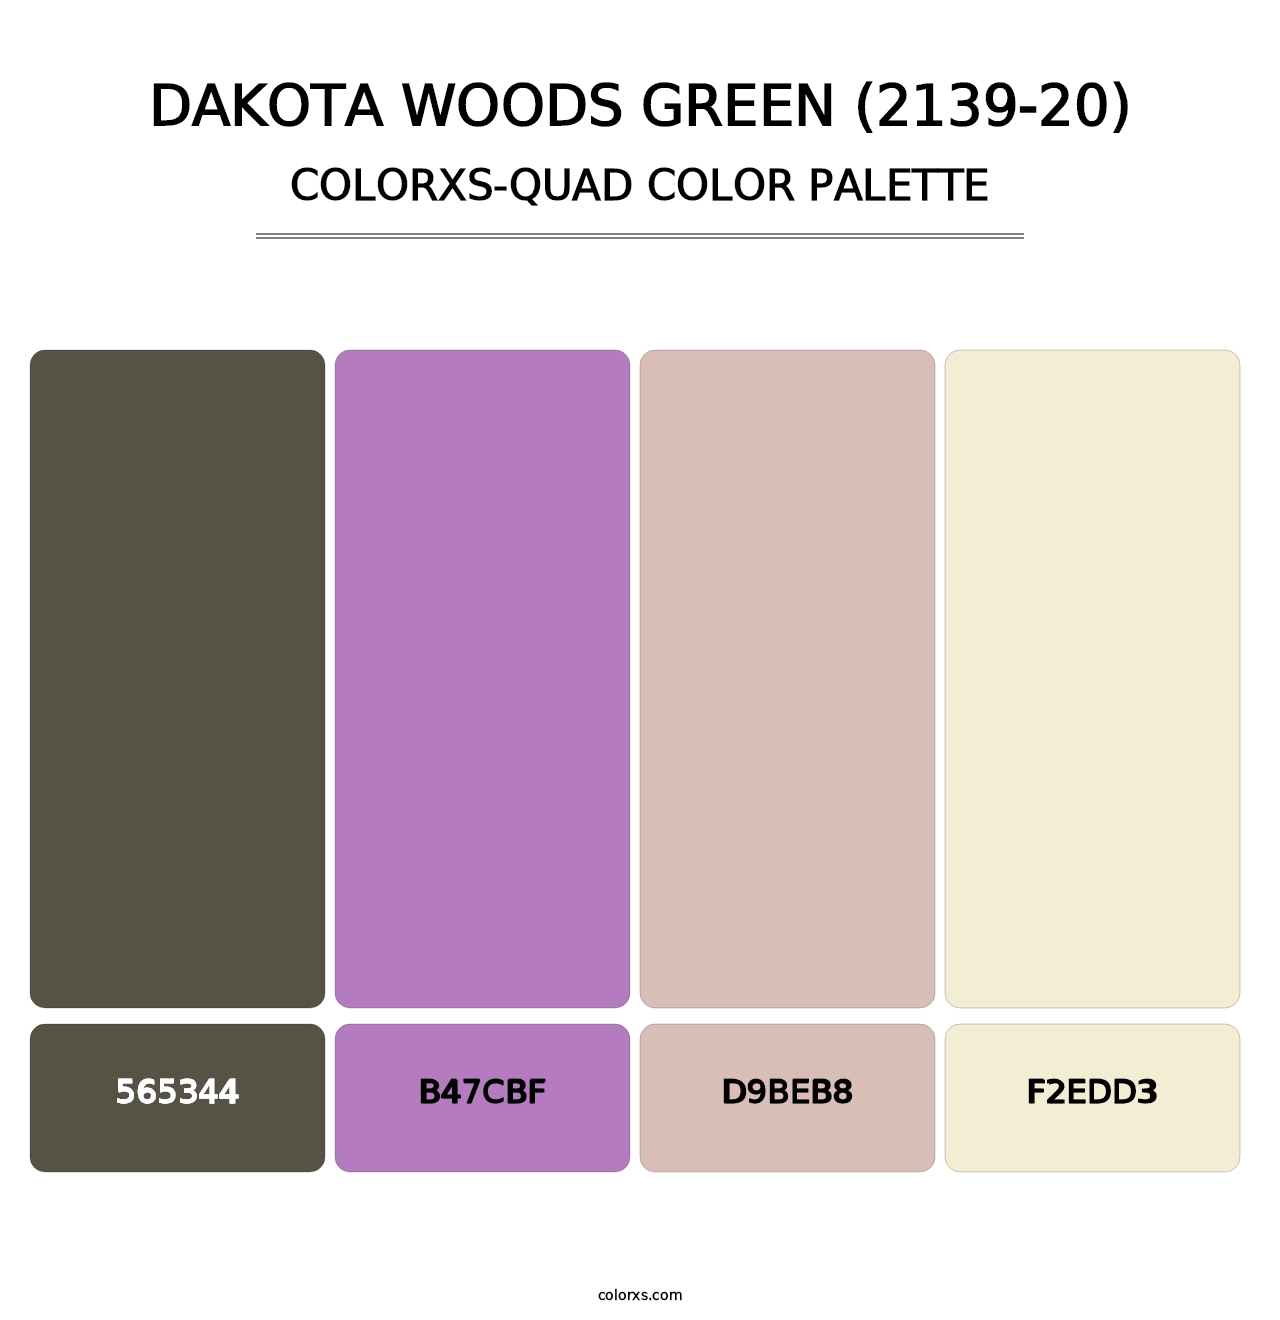 Dakota Woods Green (2139-20) - Colorxs Quad Palette